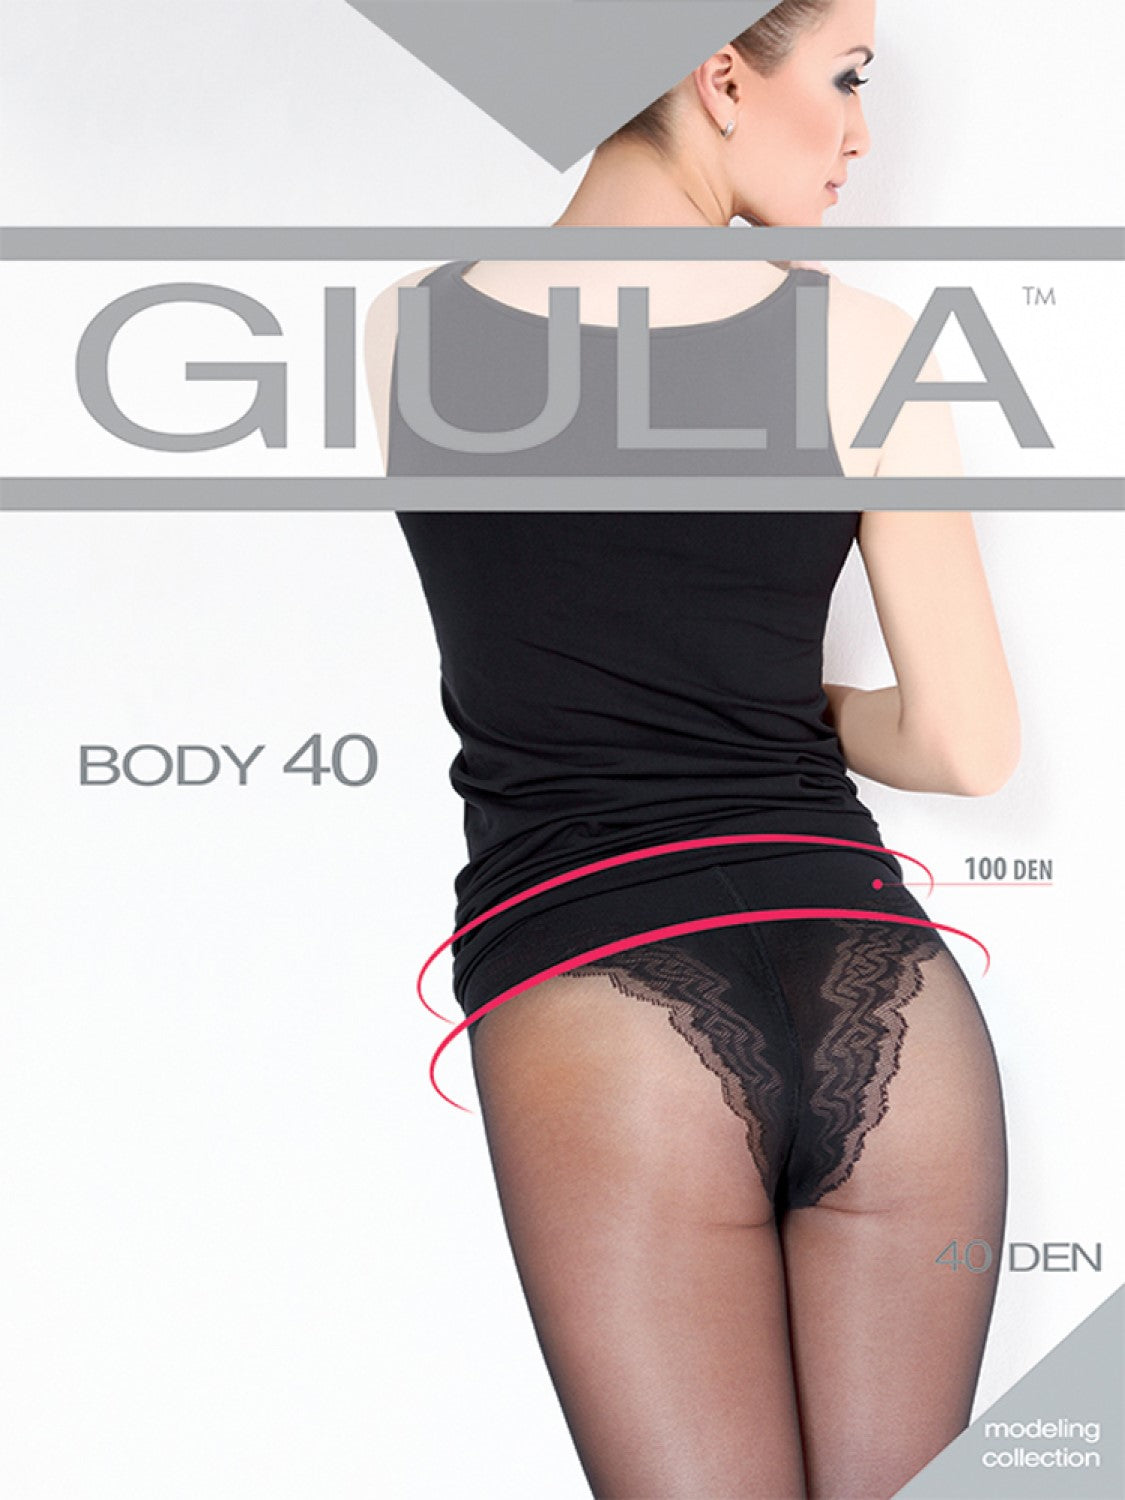 Giulia Body tights with bikini brief and targeted tummy control